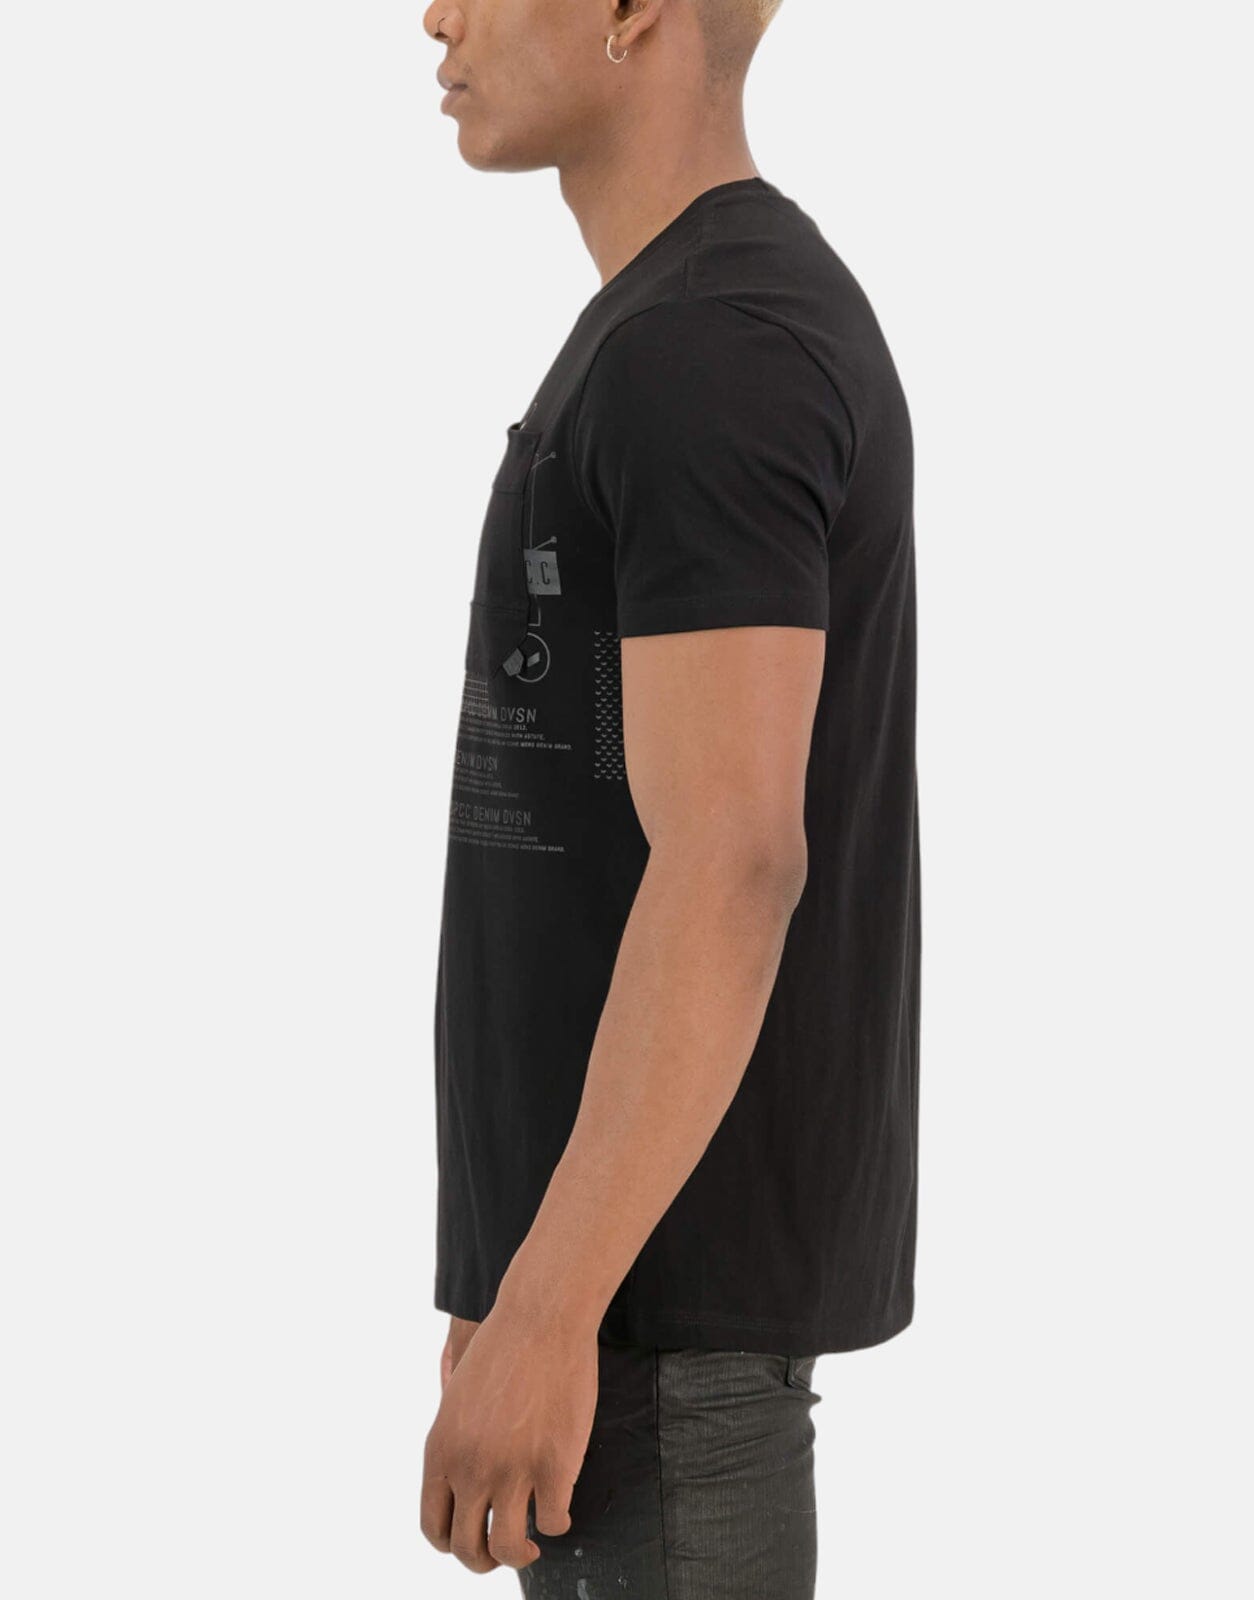 SPCC Fairfax Black T-Shirt - Subwear